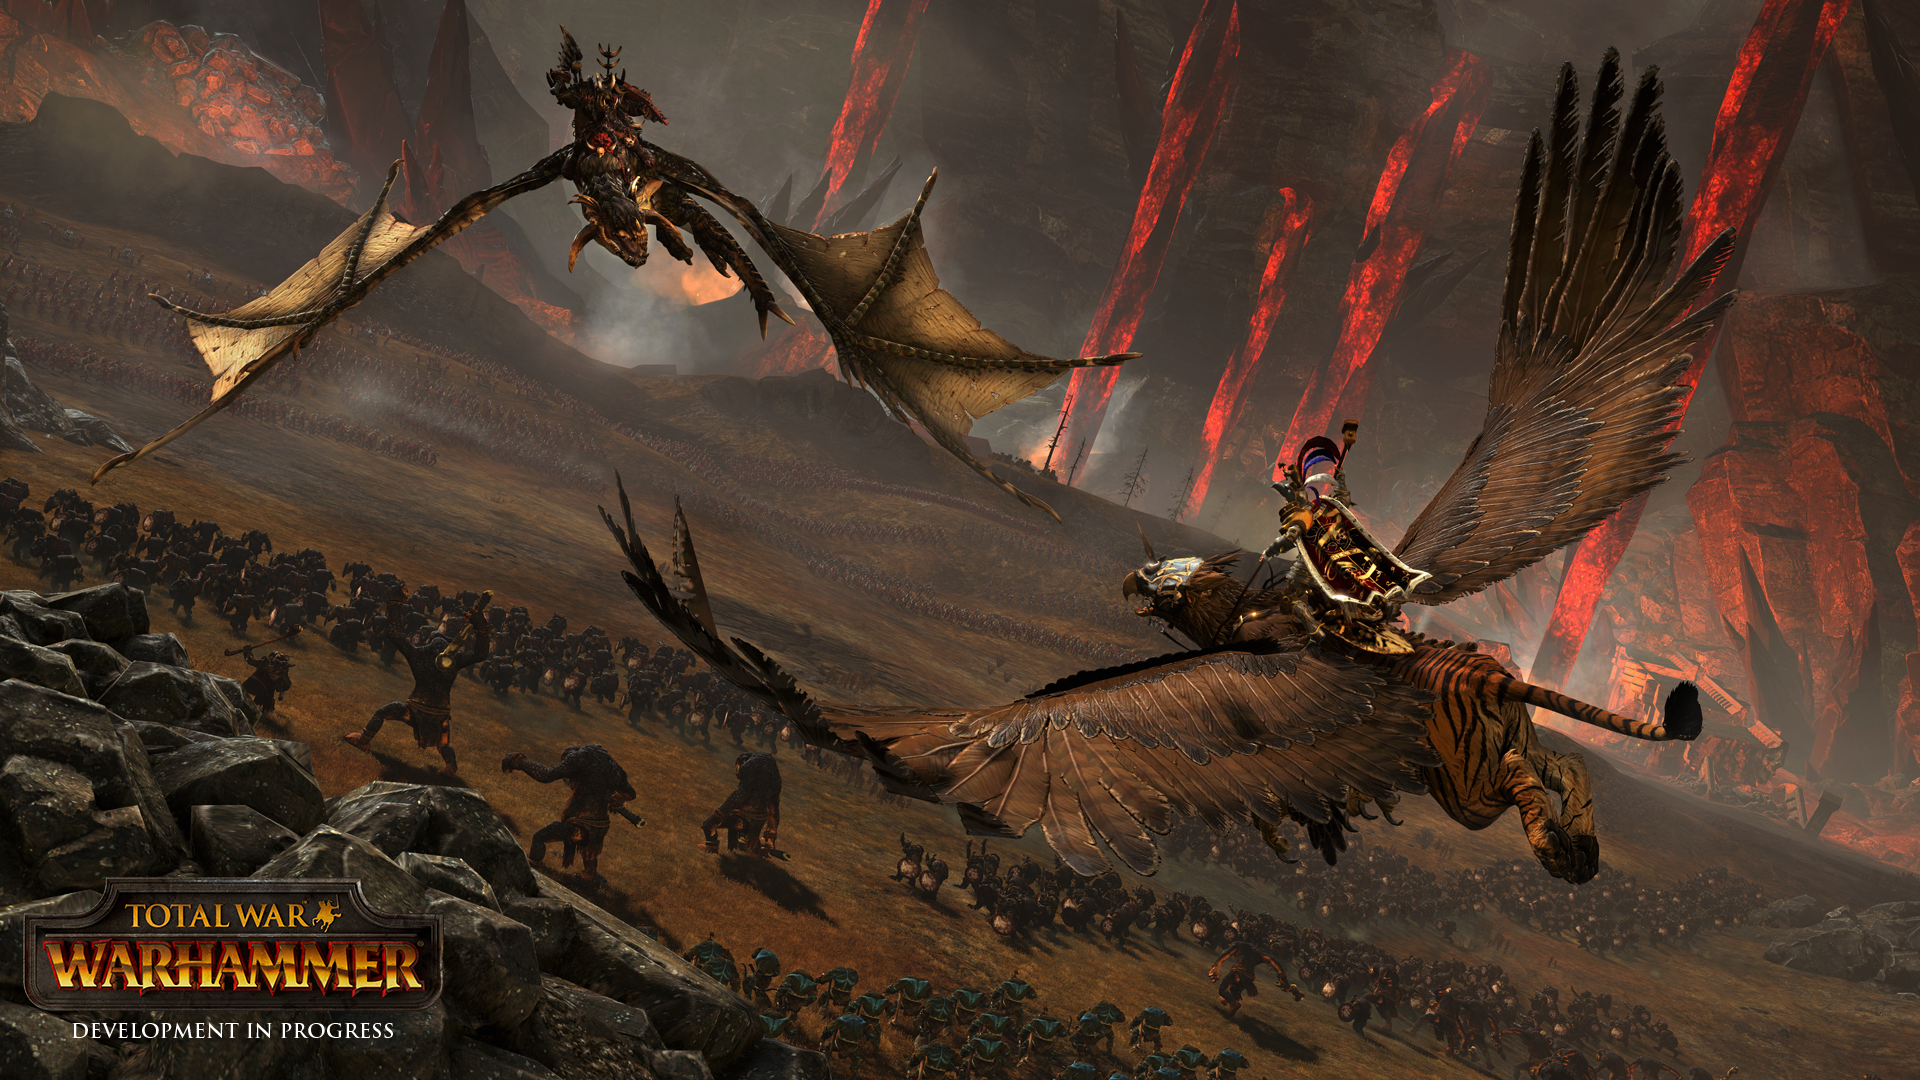 Total War: Warhammer Wallpapers, Pictures, Imag
es